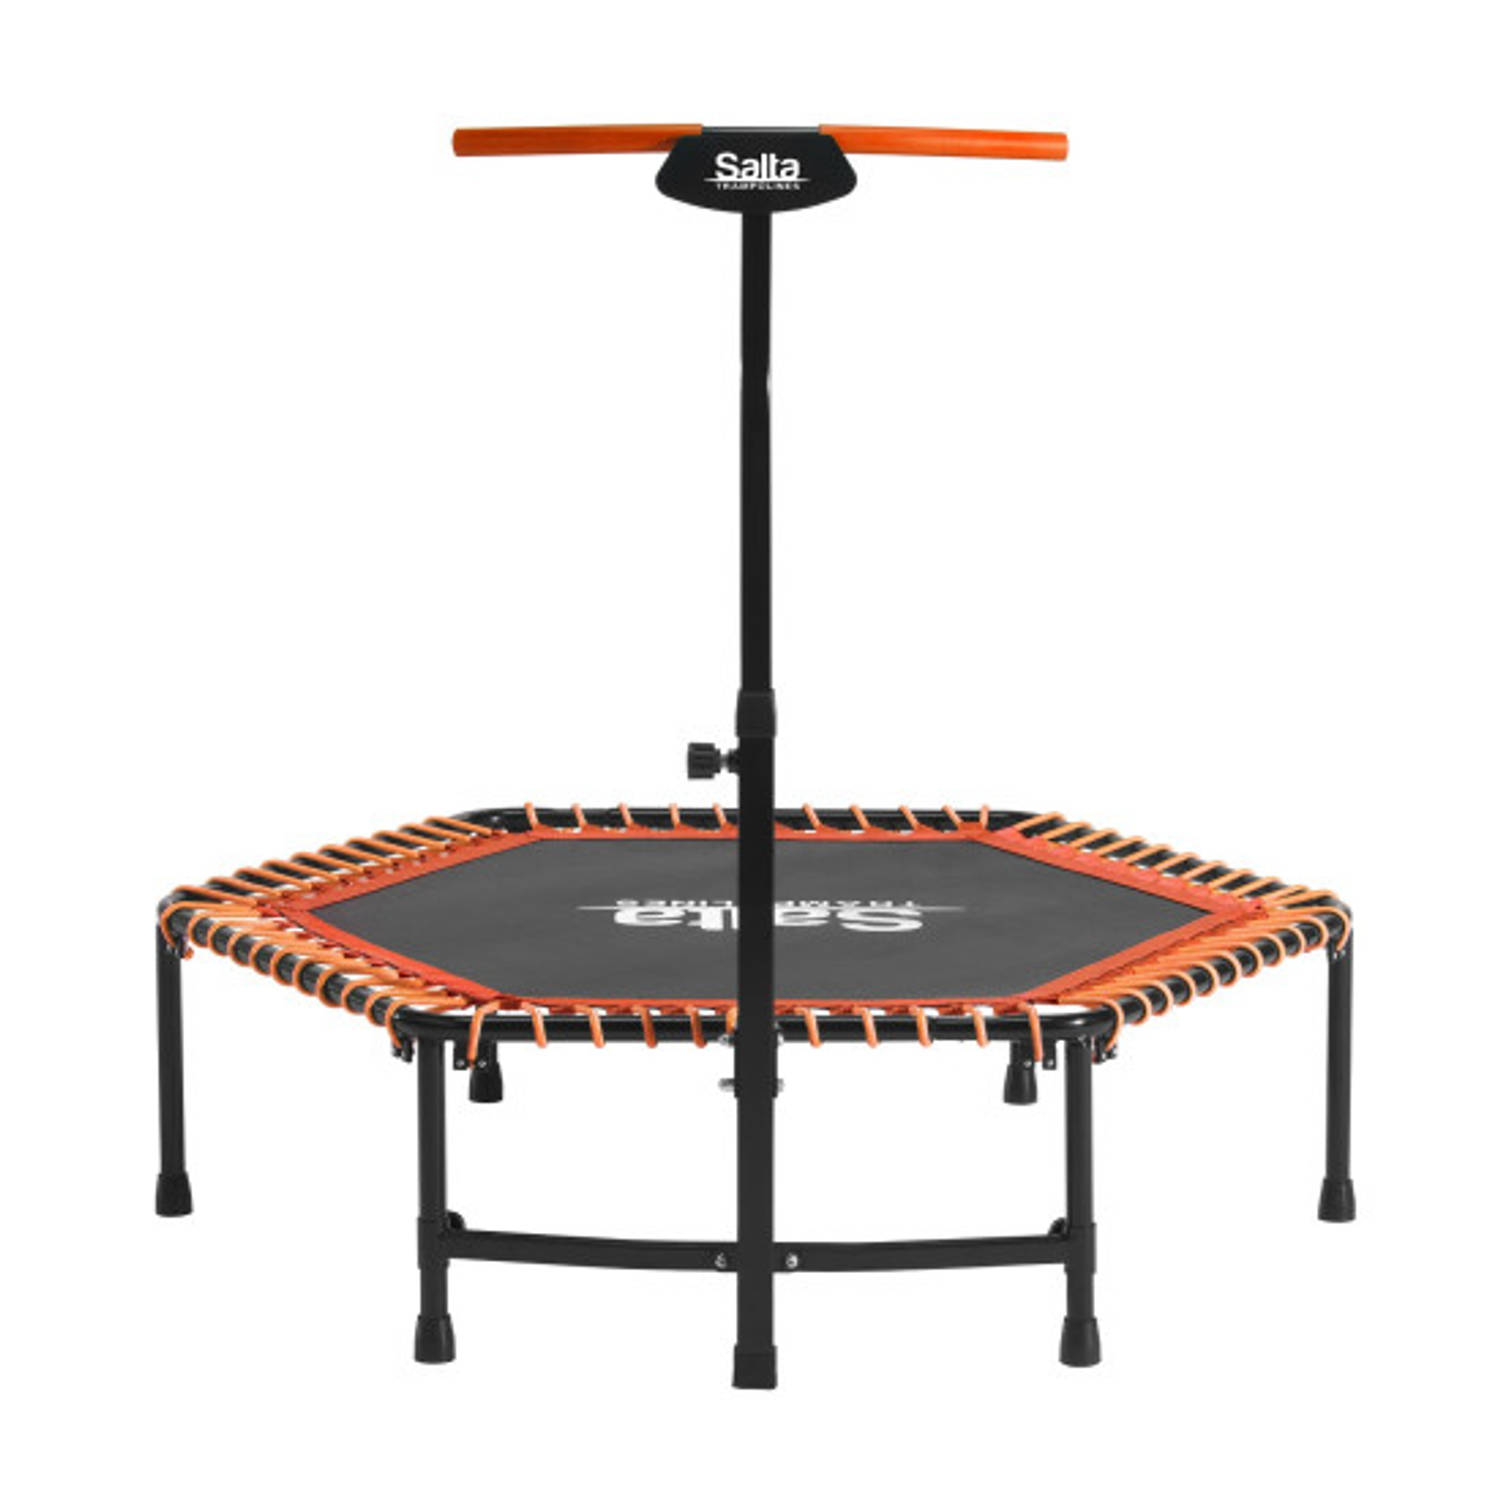 Salta Fitness trampoline including handle bar 140cm